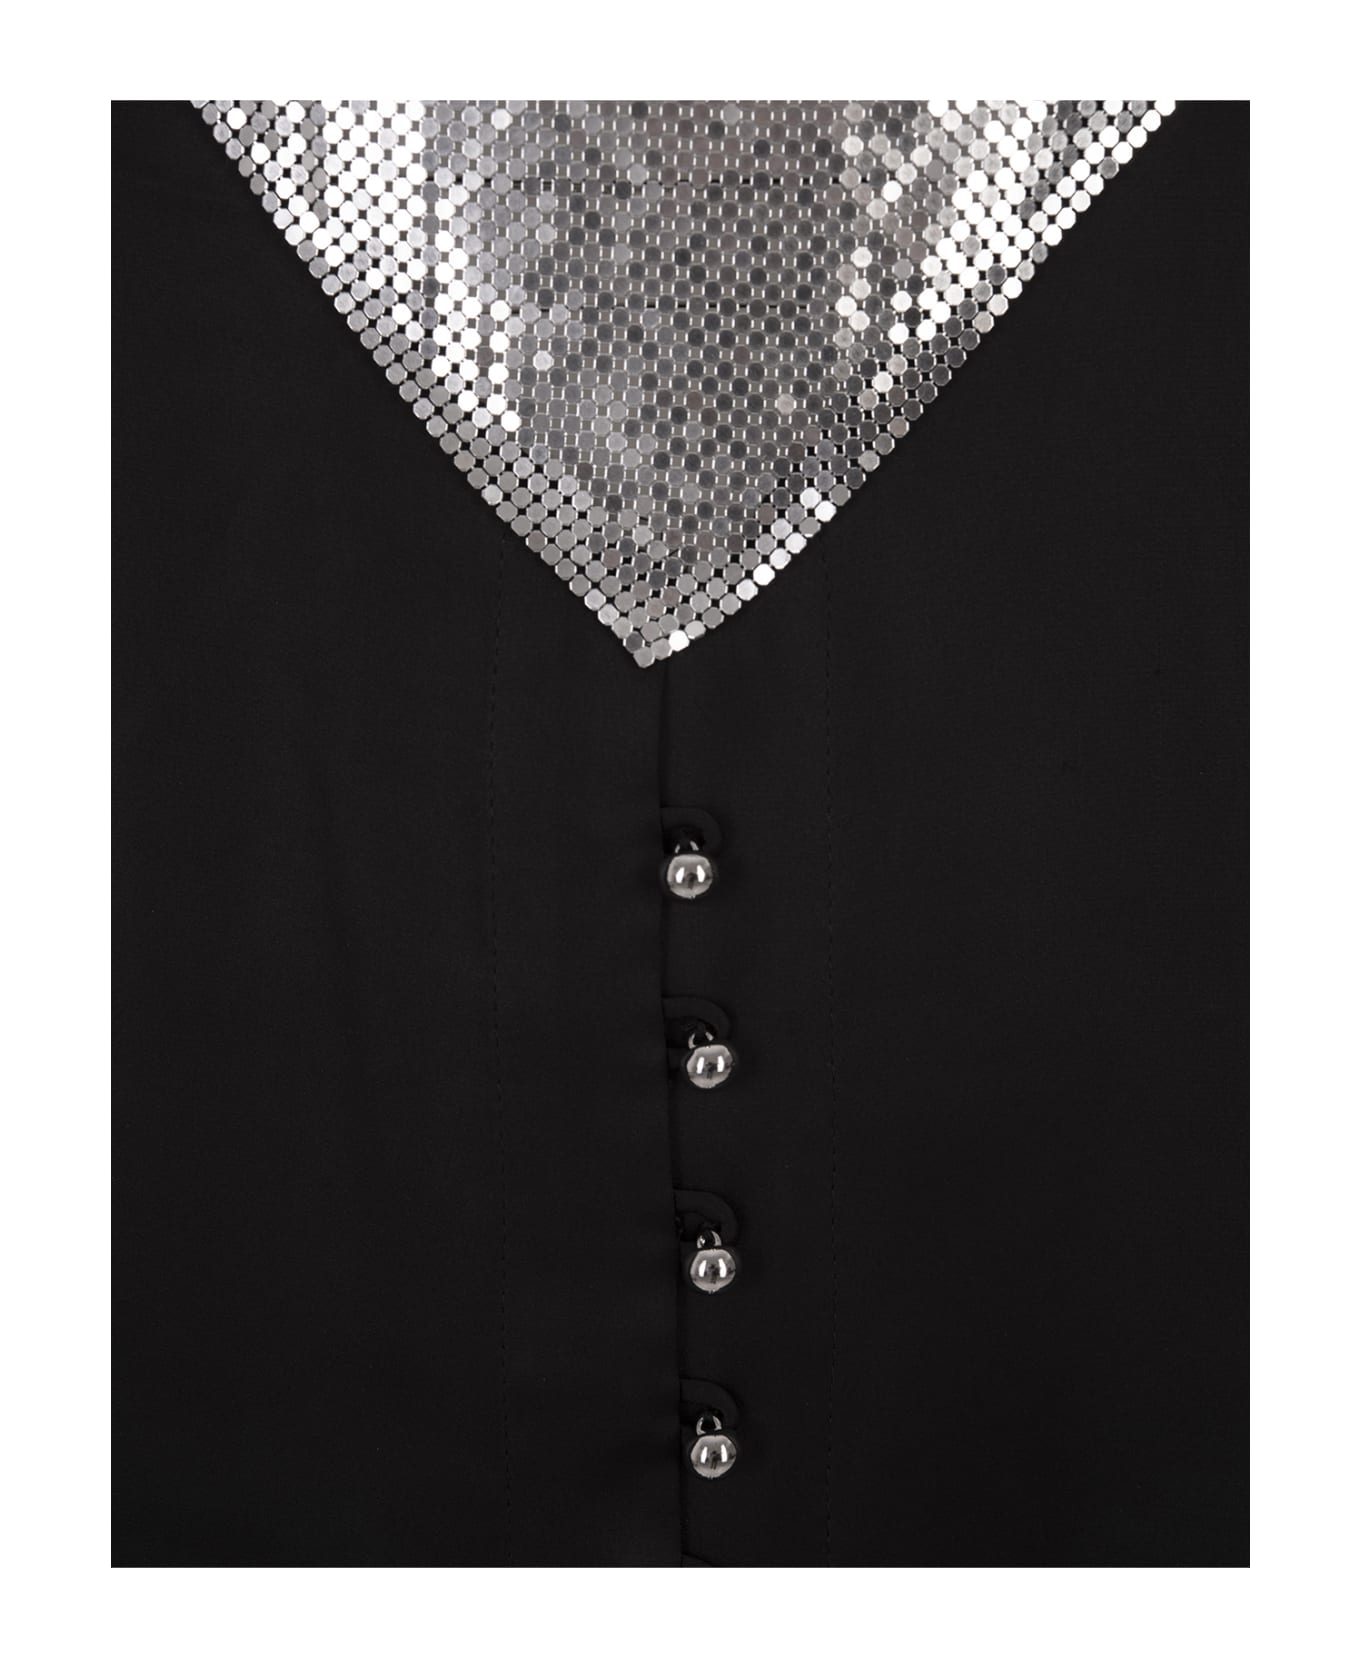 Paco Rabanne Mini Dress In Black Jersey And Silver Mesh - Black ジャンプスーツ